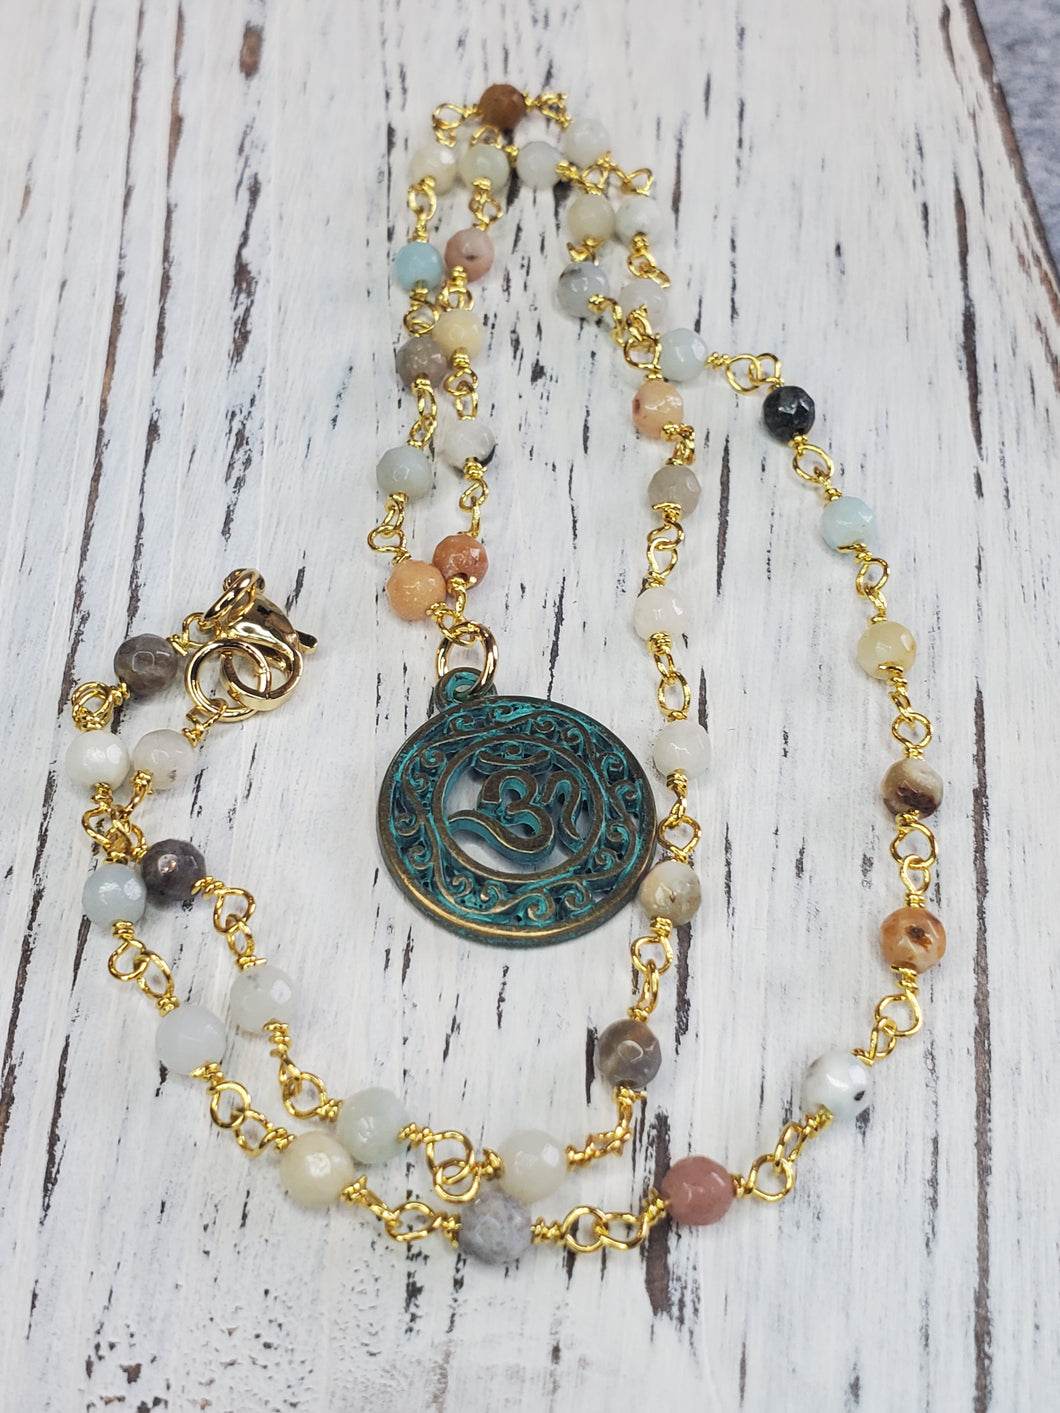 Amazonite necklace with Ohm pendant